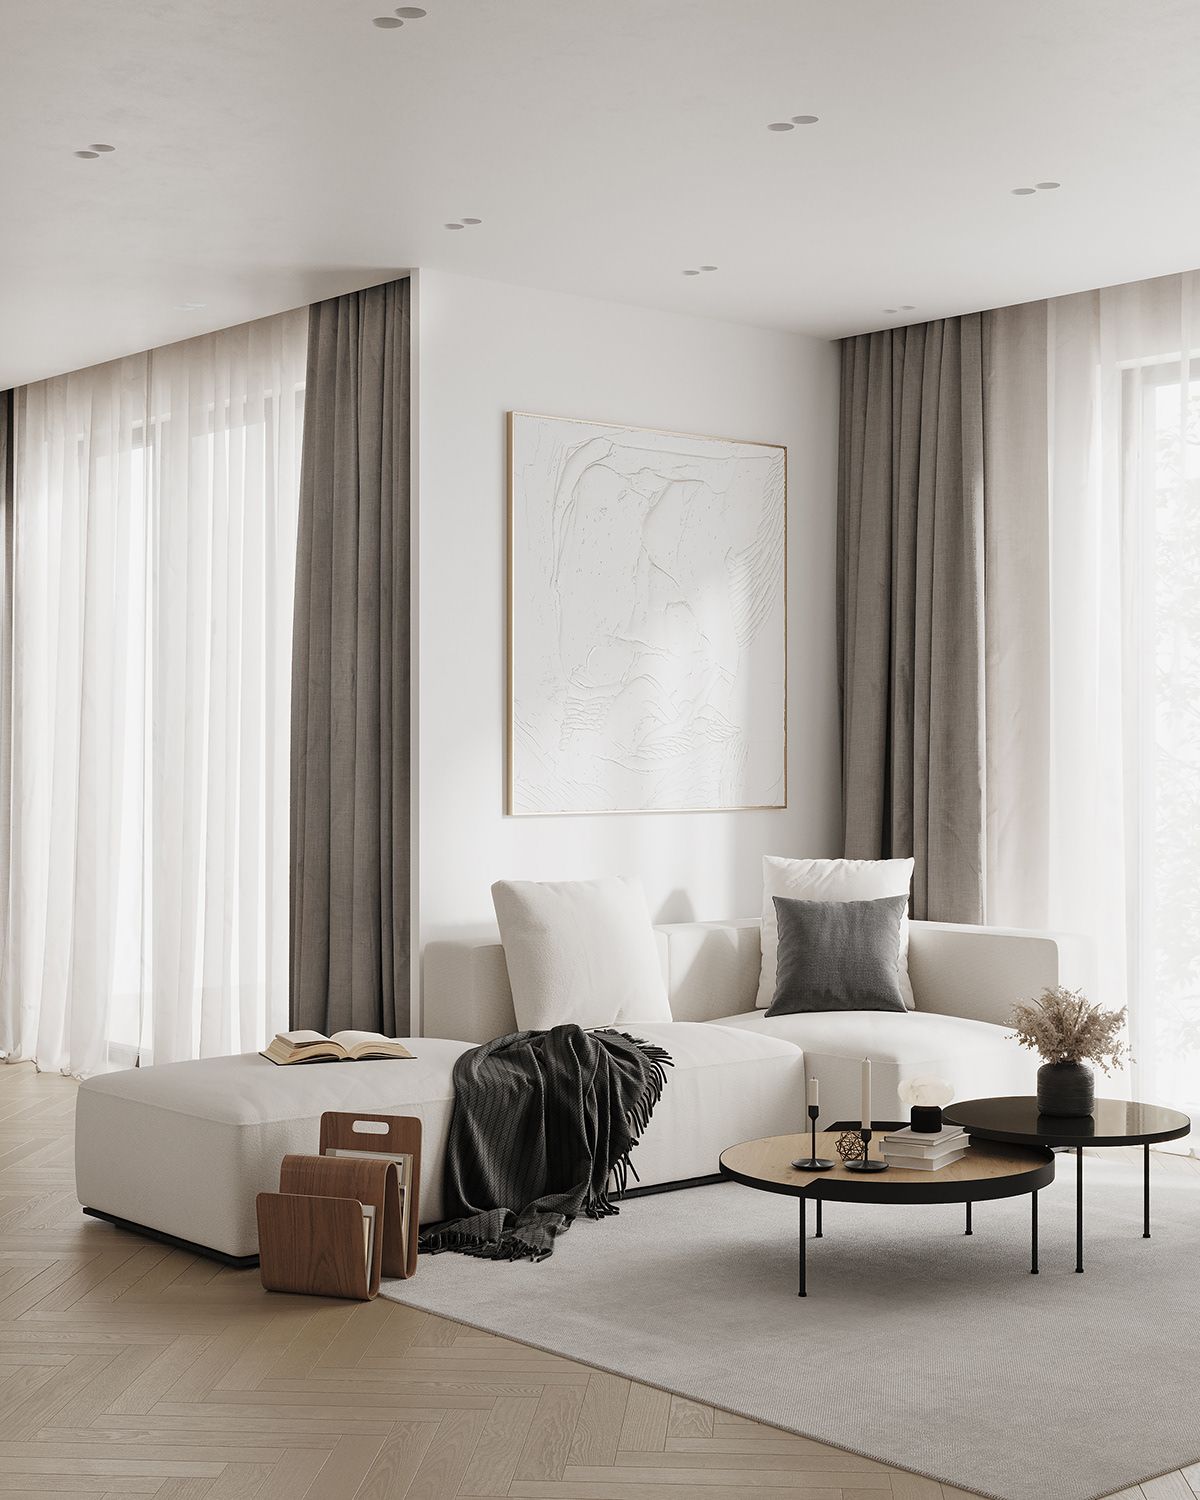 Minimalist Living Room with an Elegant Design